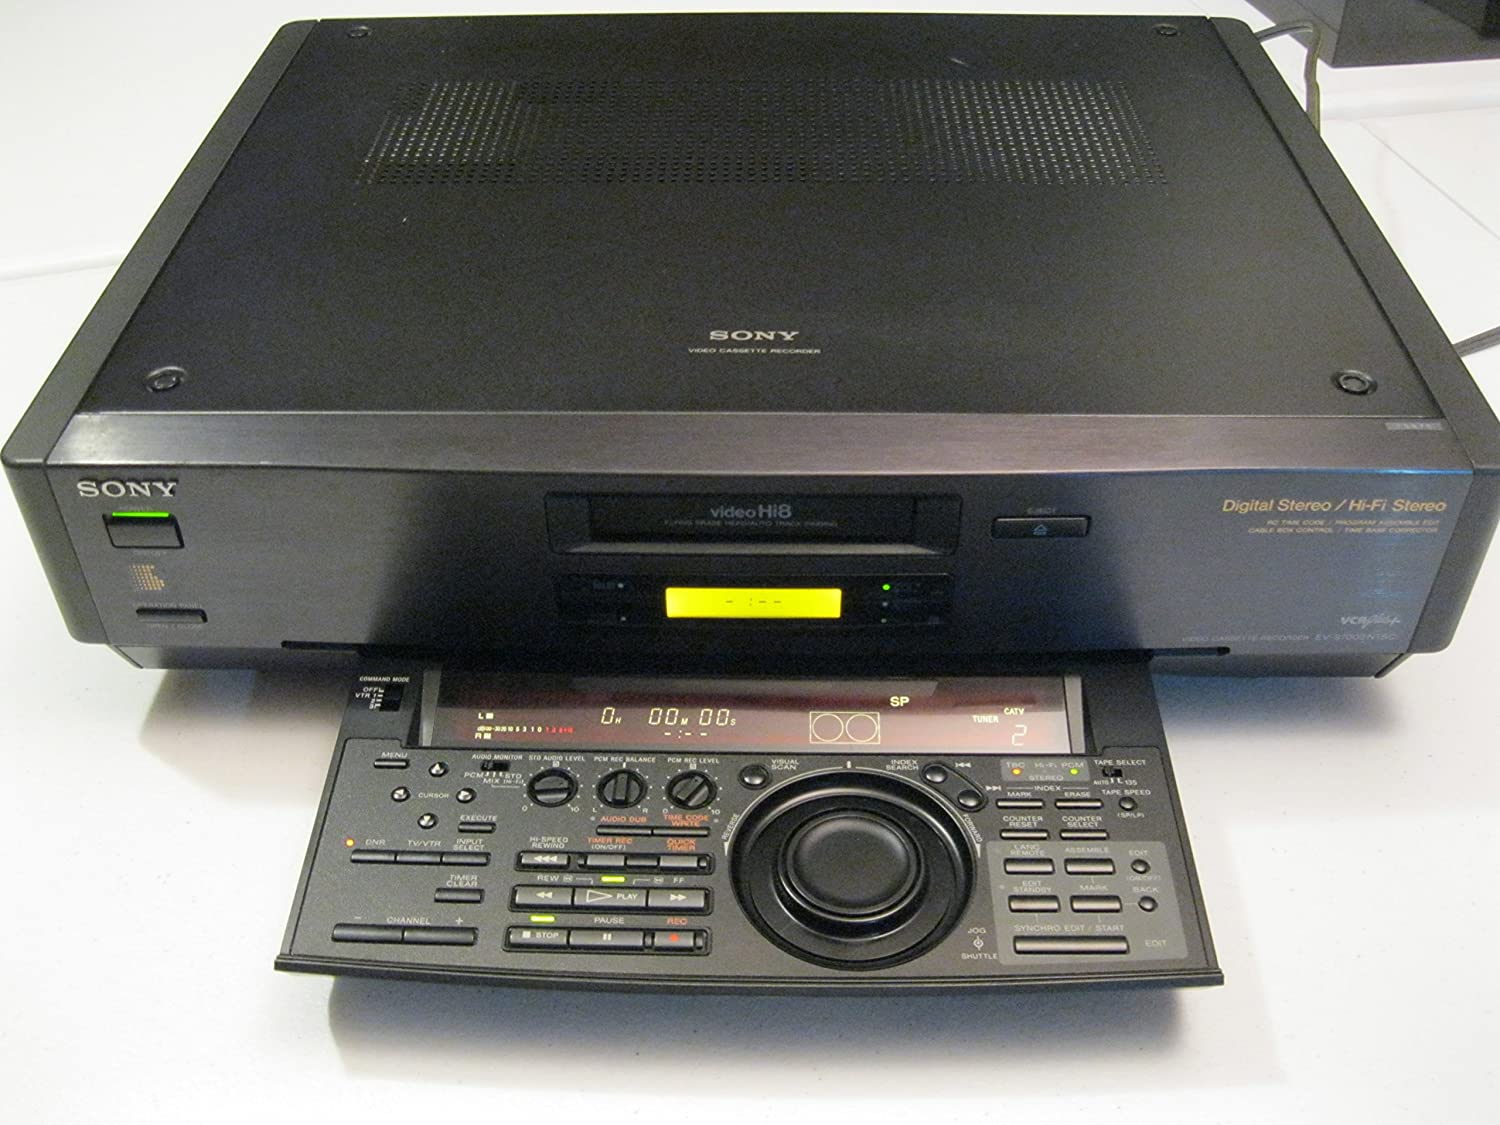 sony EV-S7000 NTSC Hi8 Stereo VCR plays 8mm Hi8 analog tapes – I 